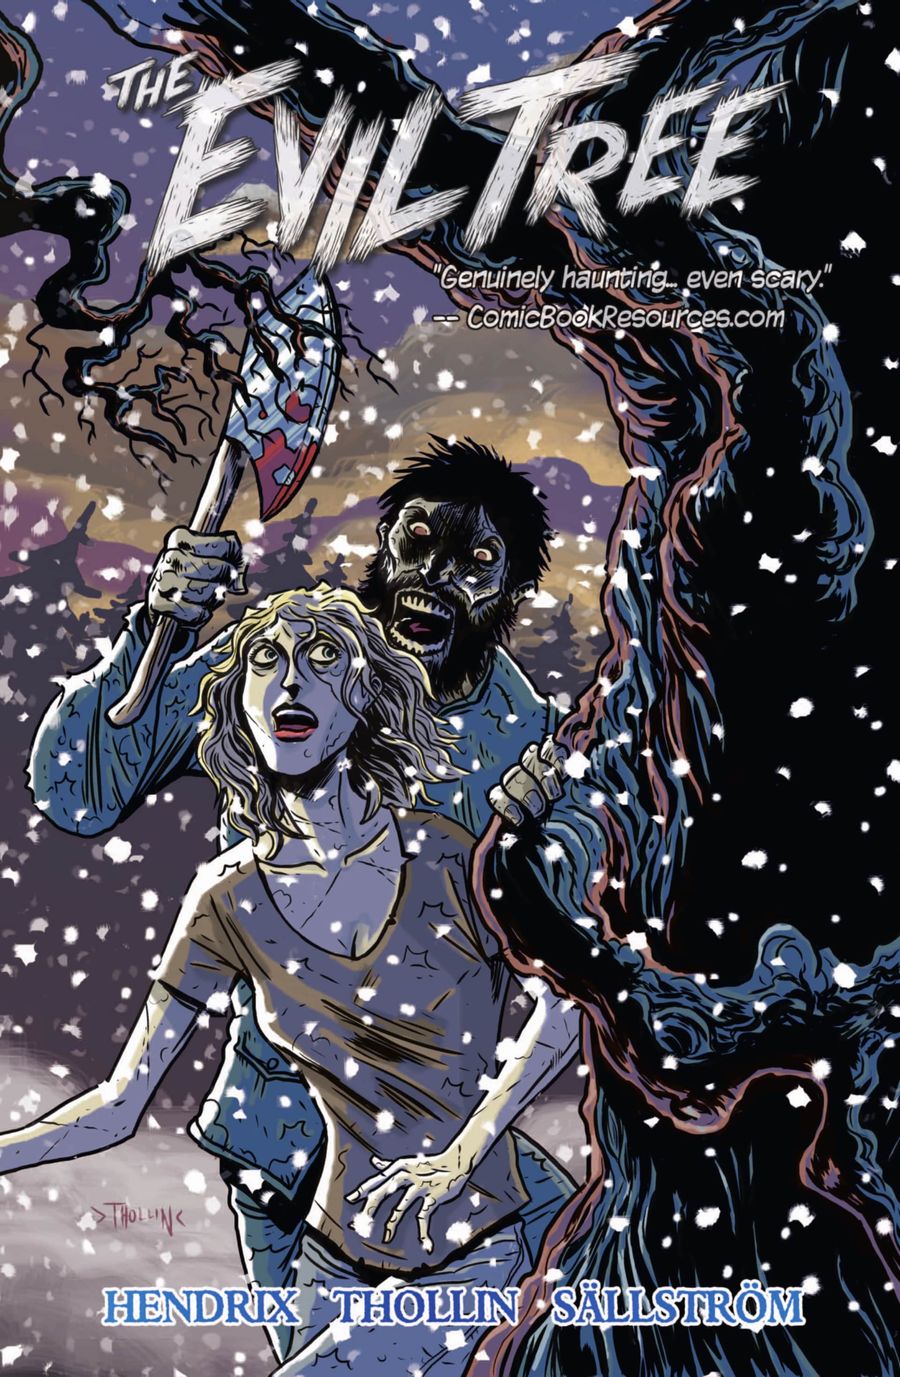 Arcana Comics | The Evil Tree Graphic Novel page 1 | Spinwhiz Comics